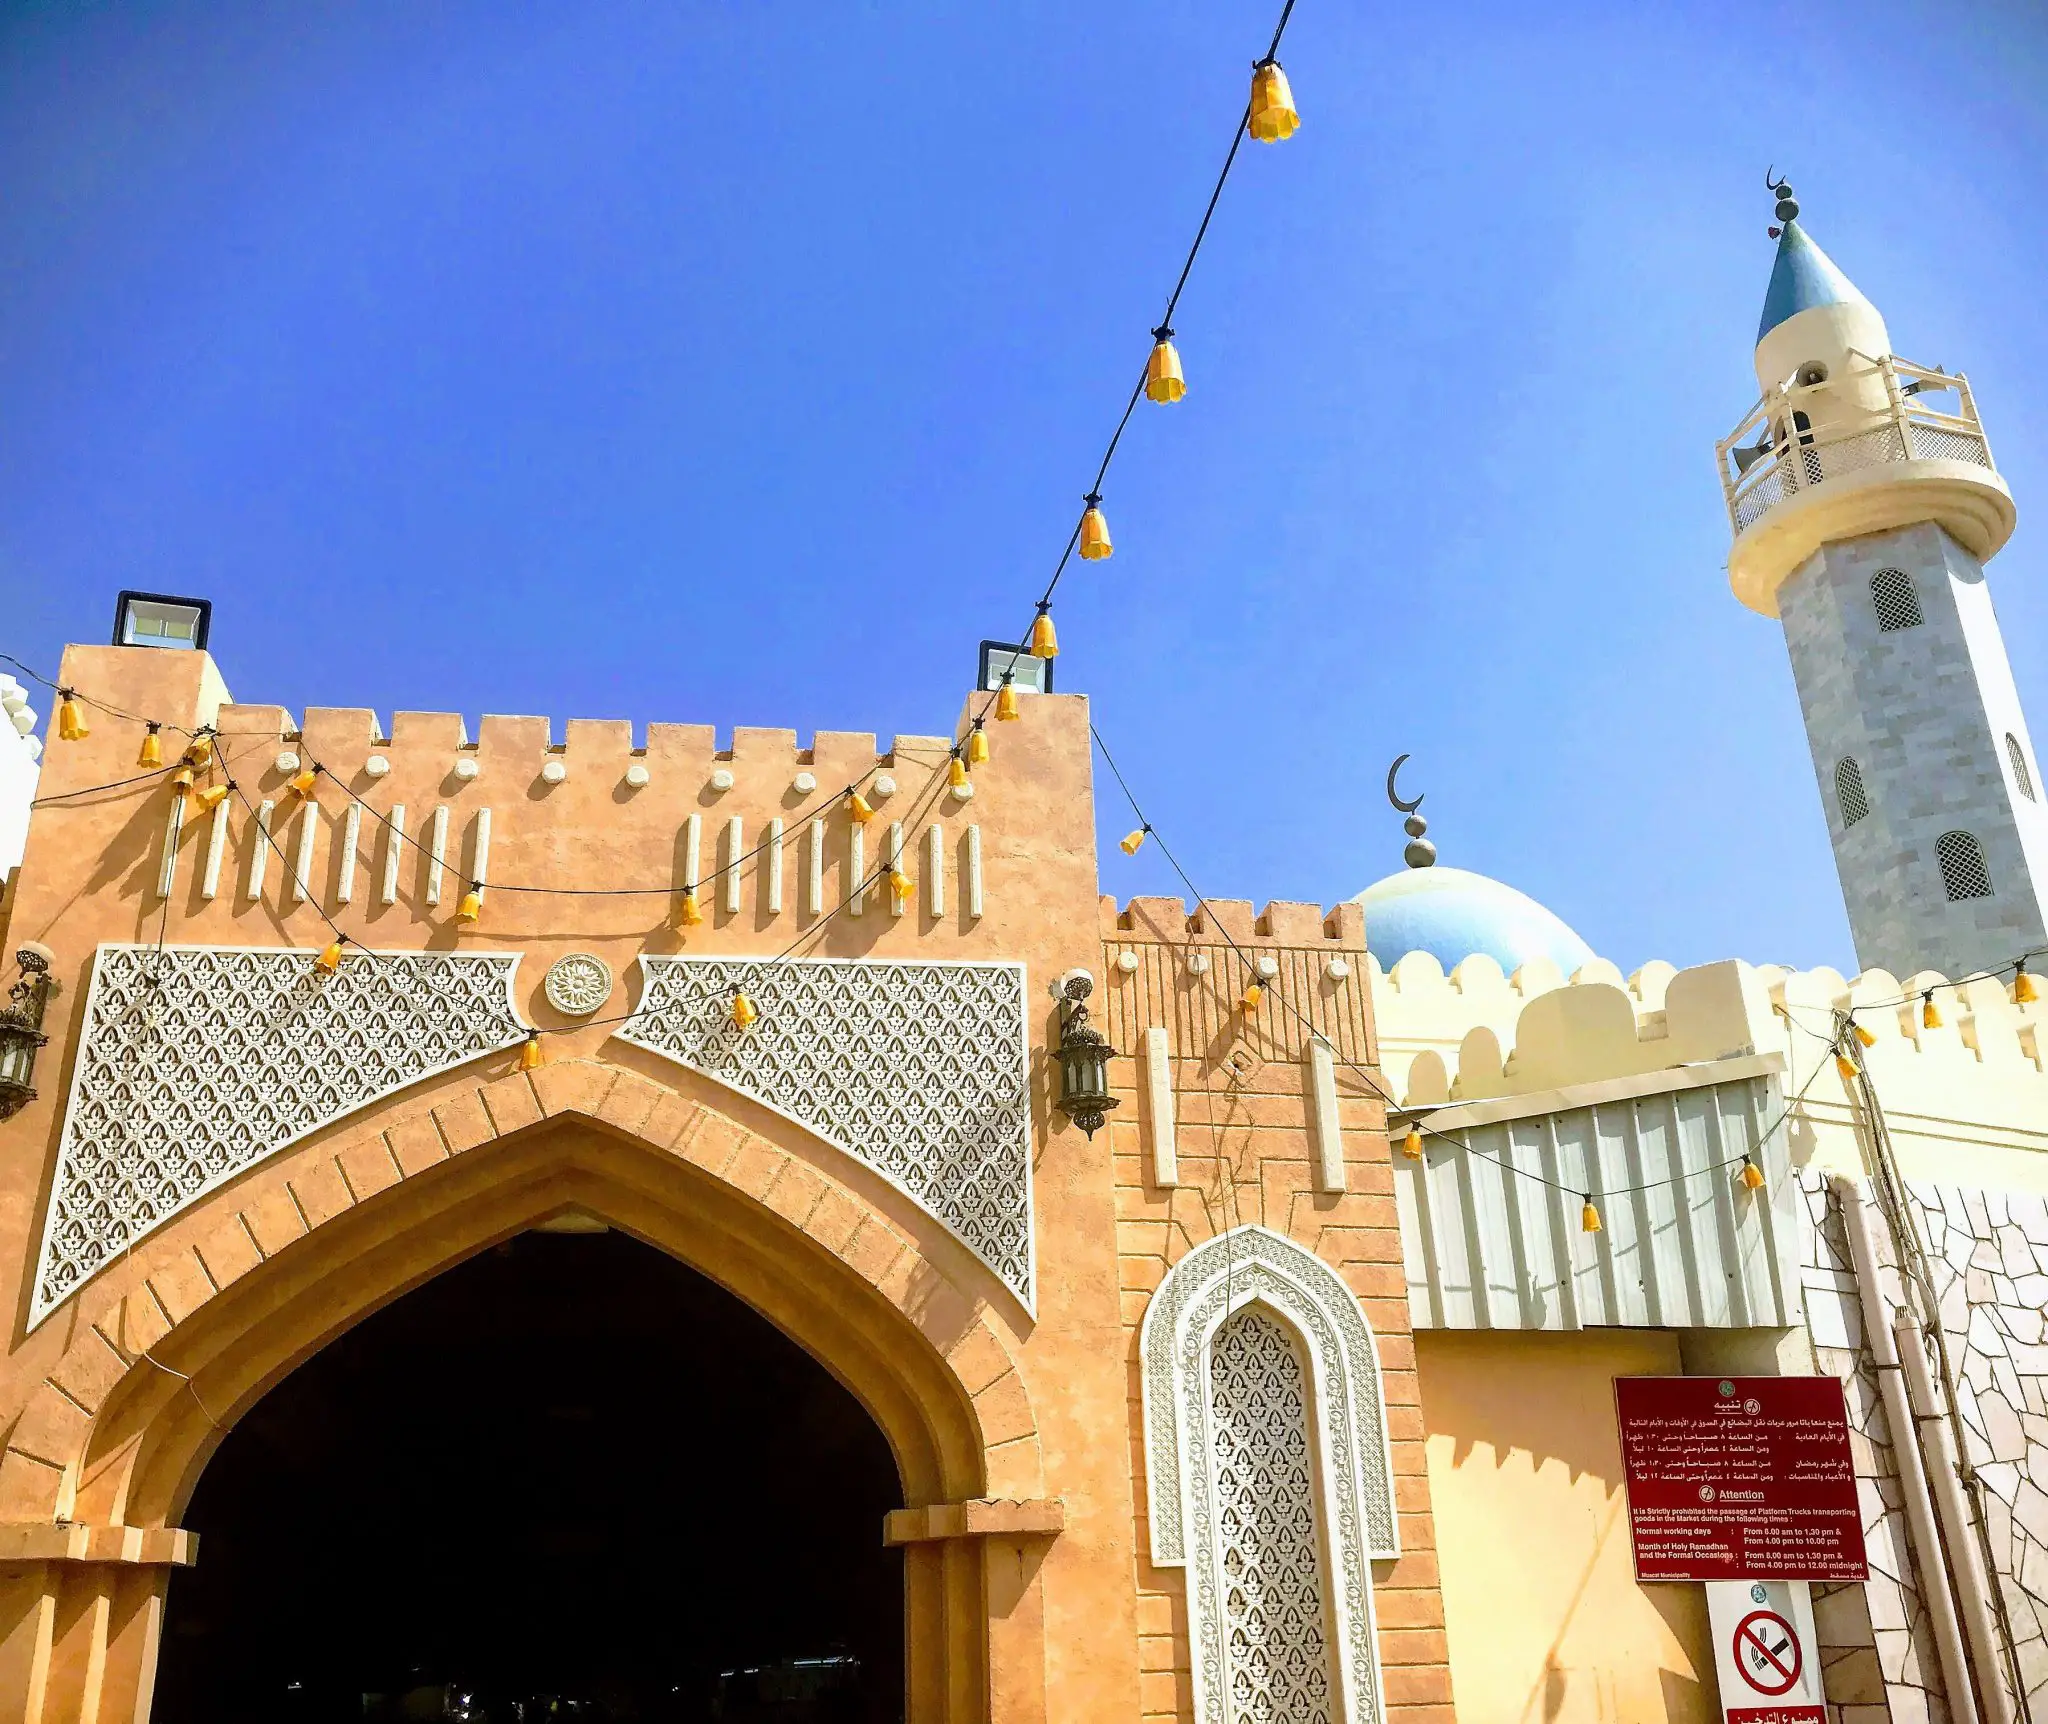 Muttrah souq, Muscat, Oman